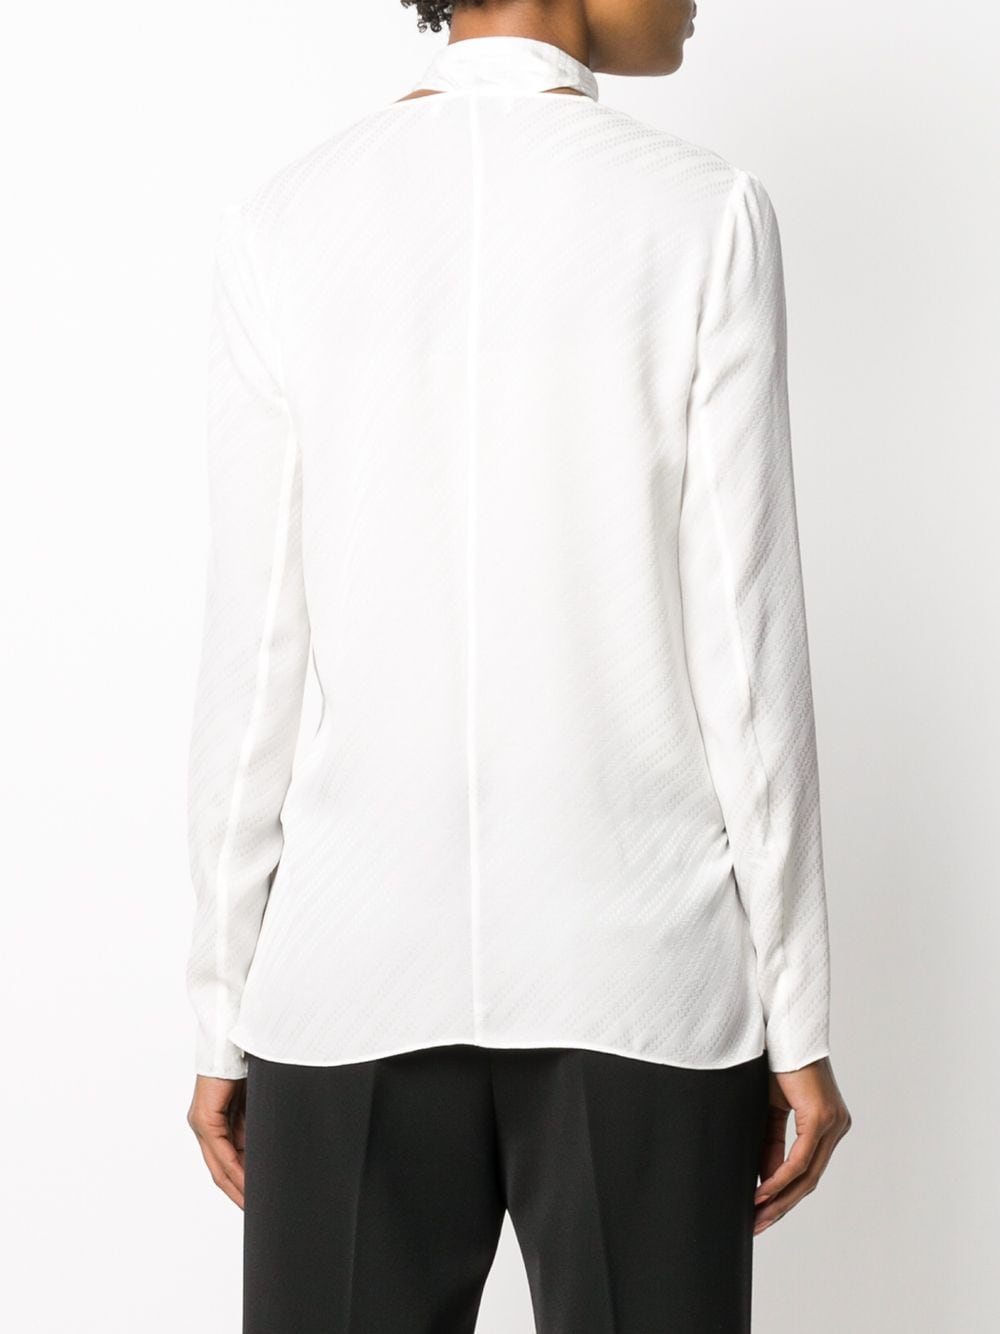 фото Givenchy блузка в полоску с завязками на воротнике